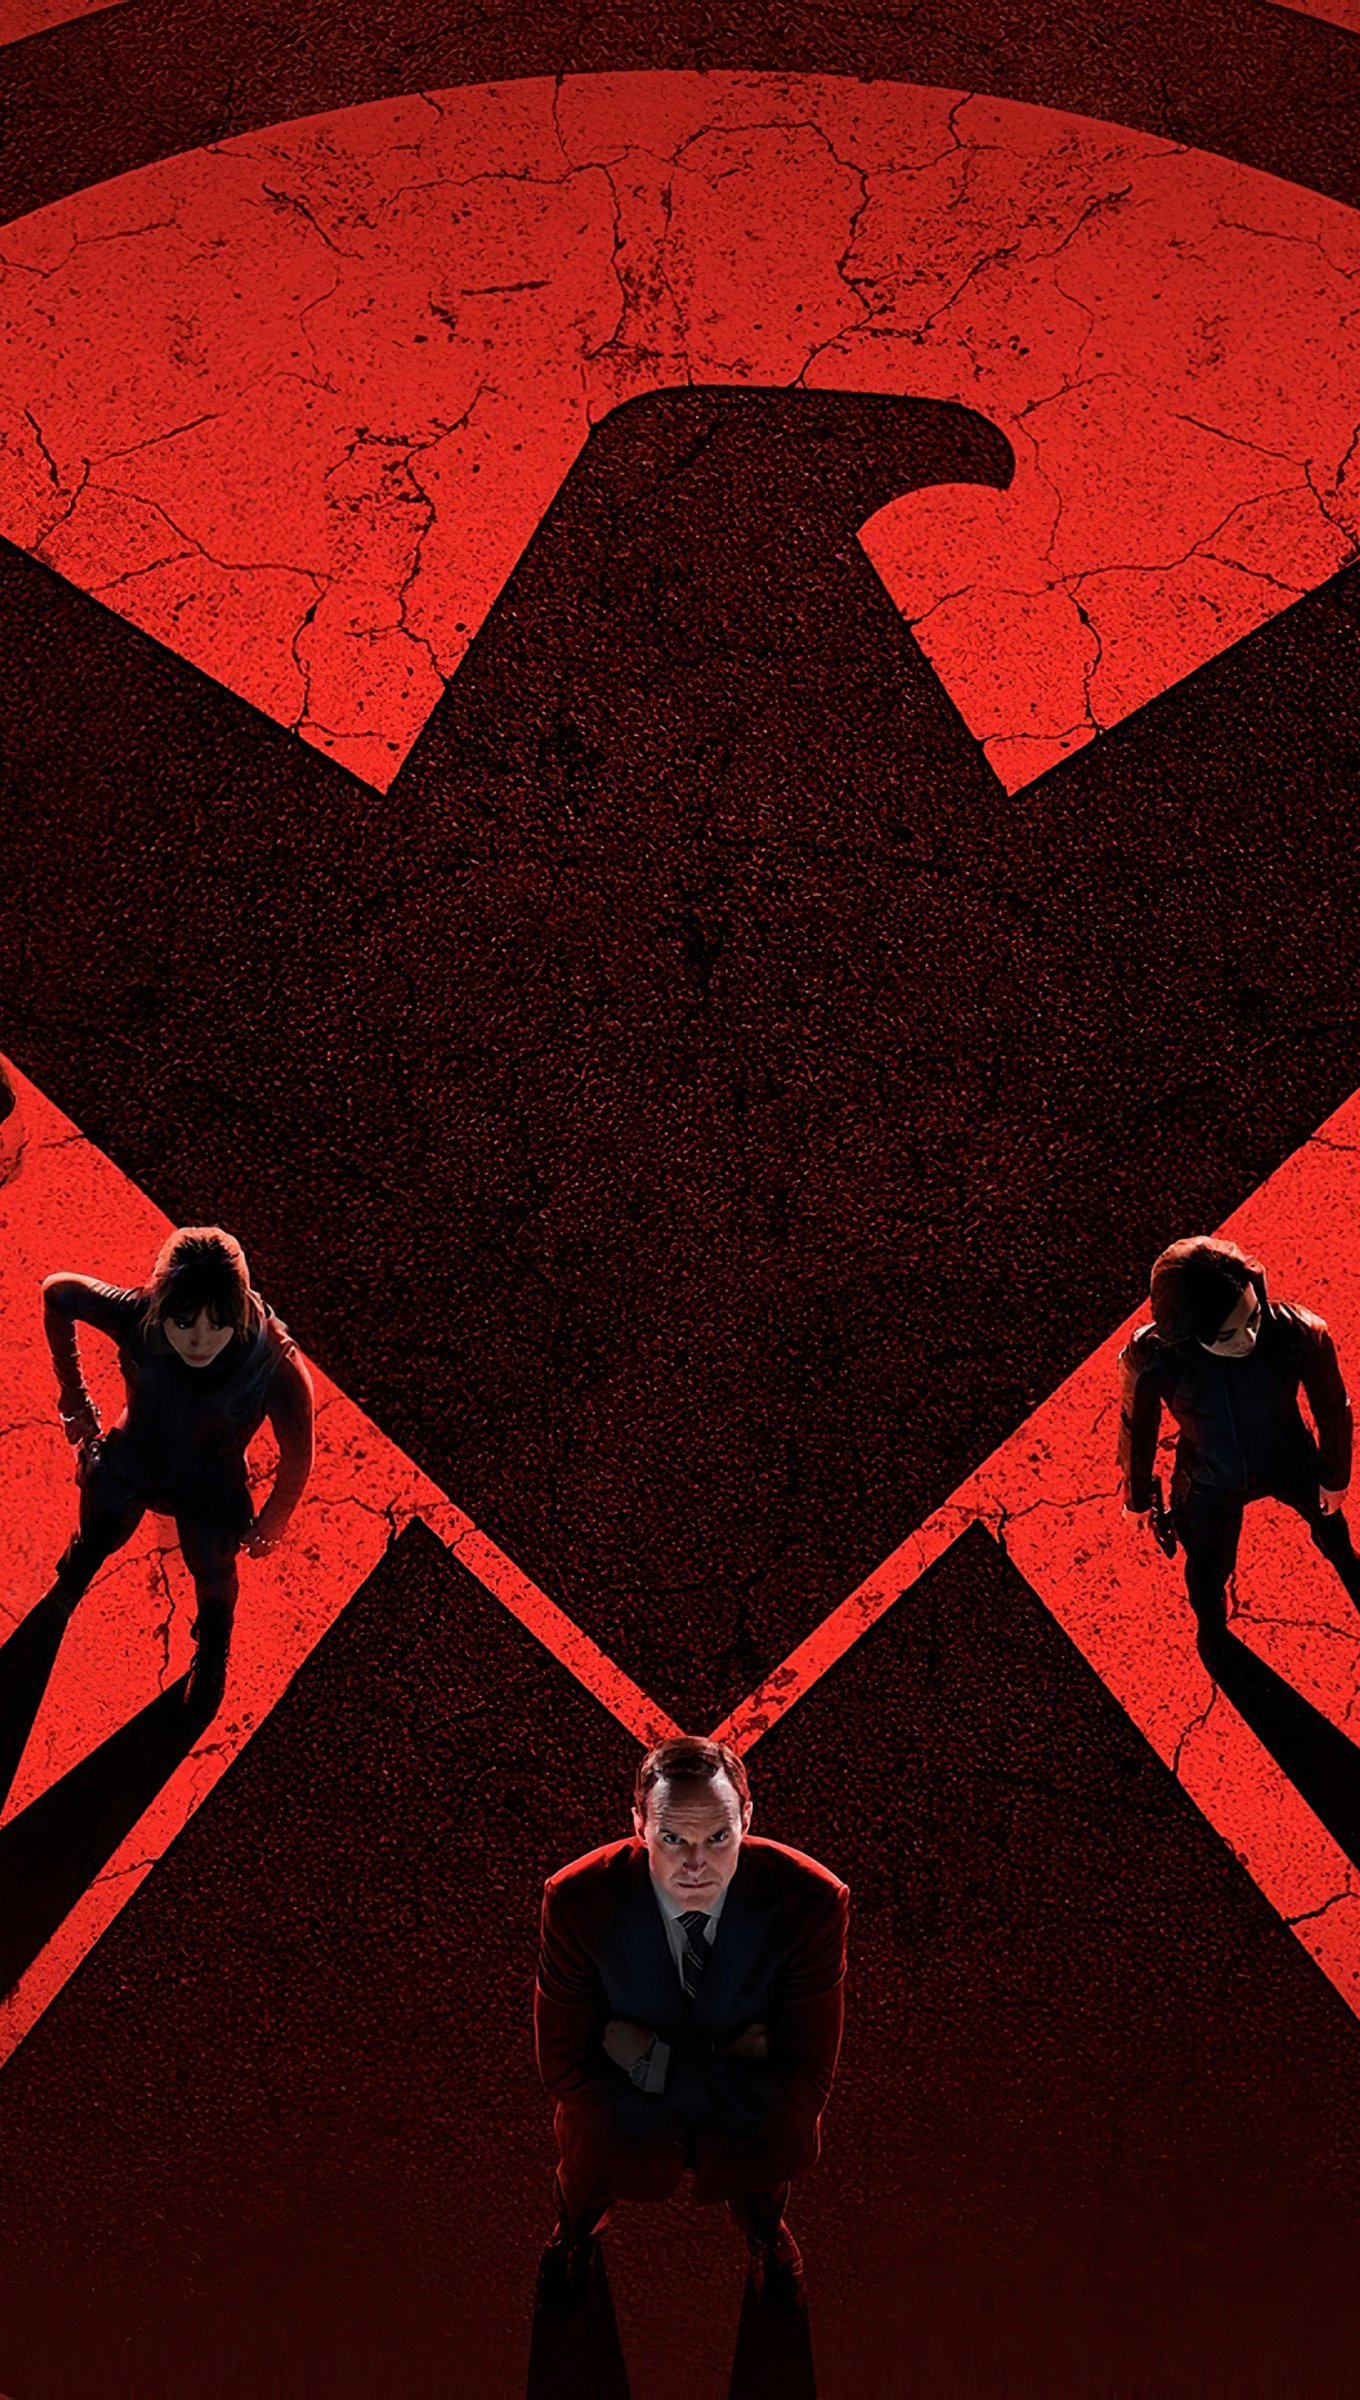 Marvel Agents Of Shield Season 7 Wallpapers